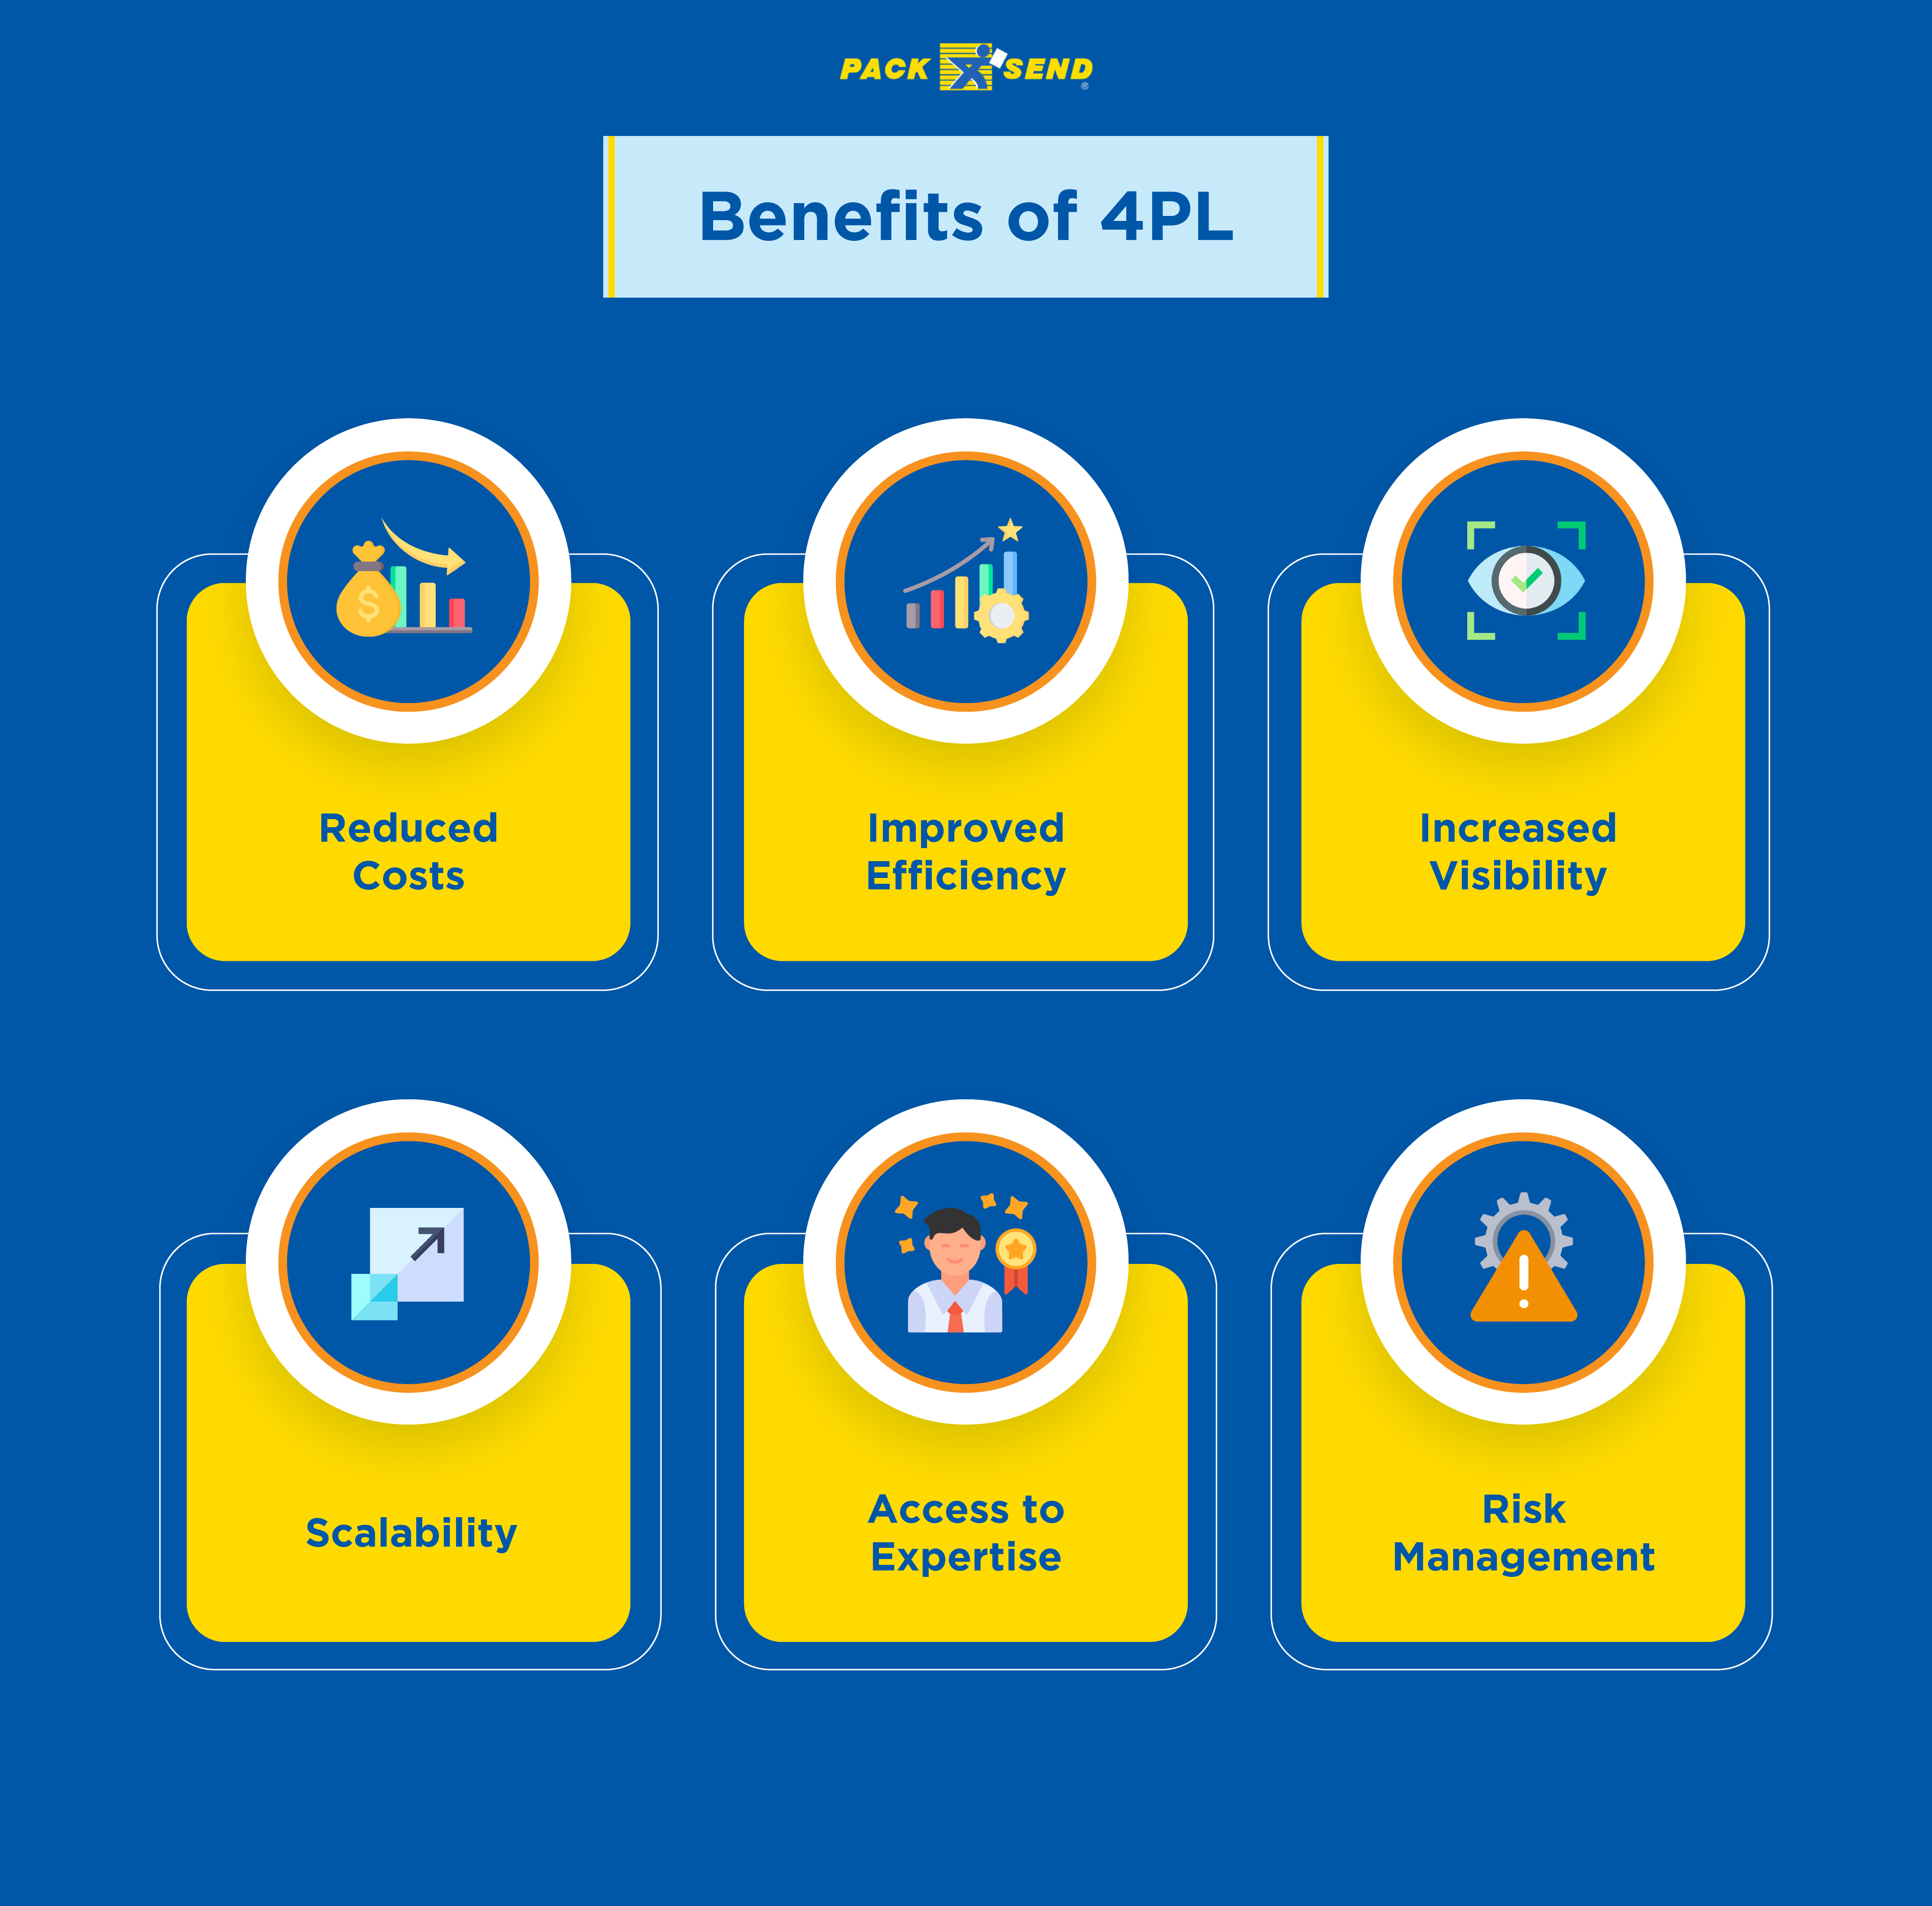 Benefits of 4PL